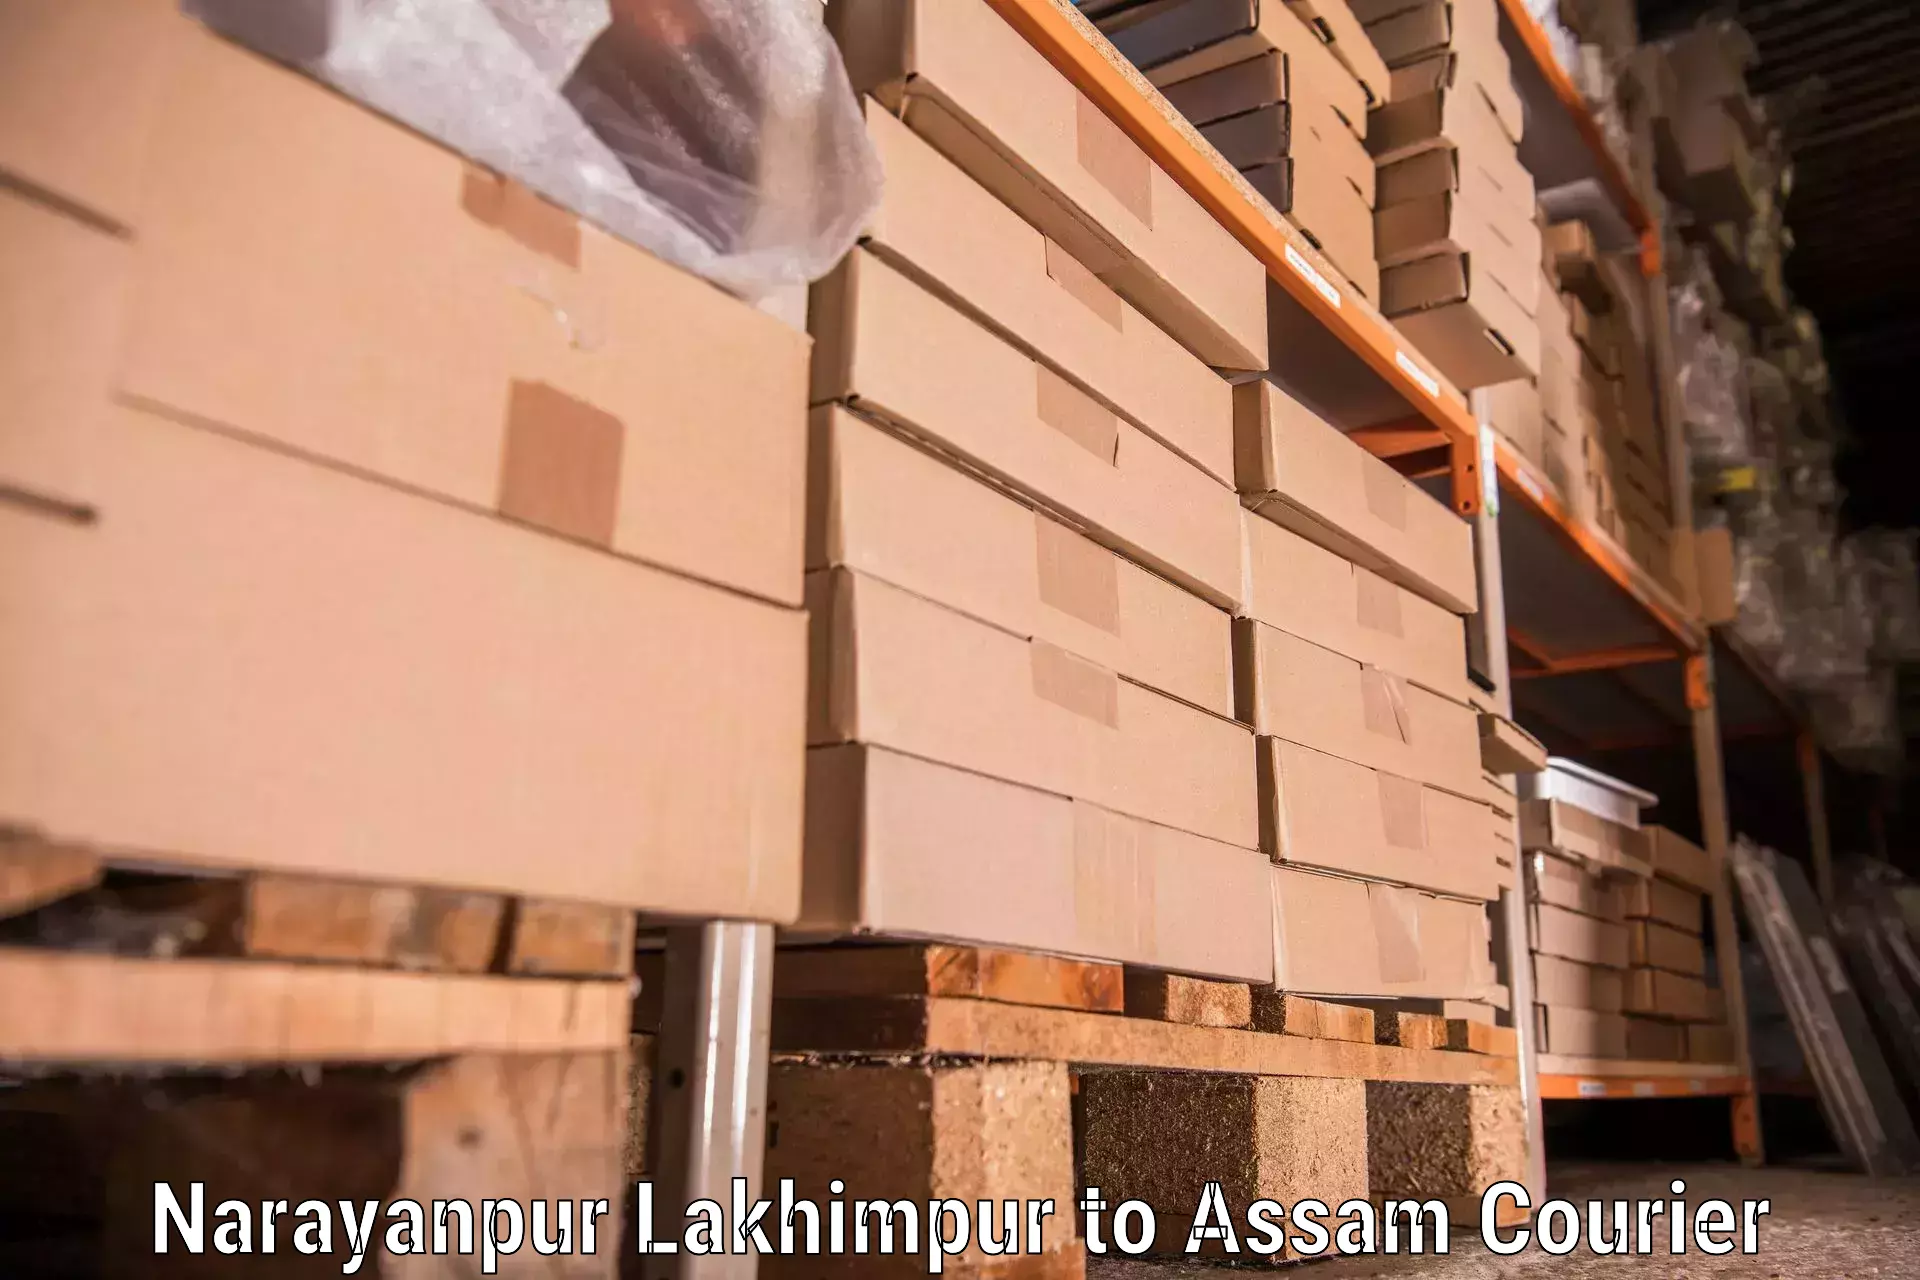 Trusted moving company Narayanpur Lakhimpur to Hailakandi